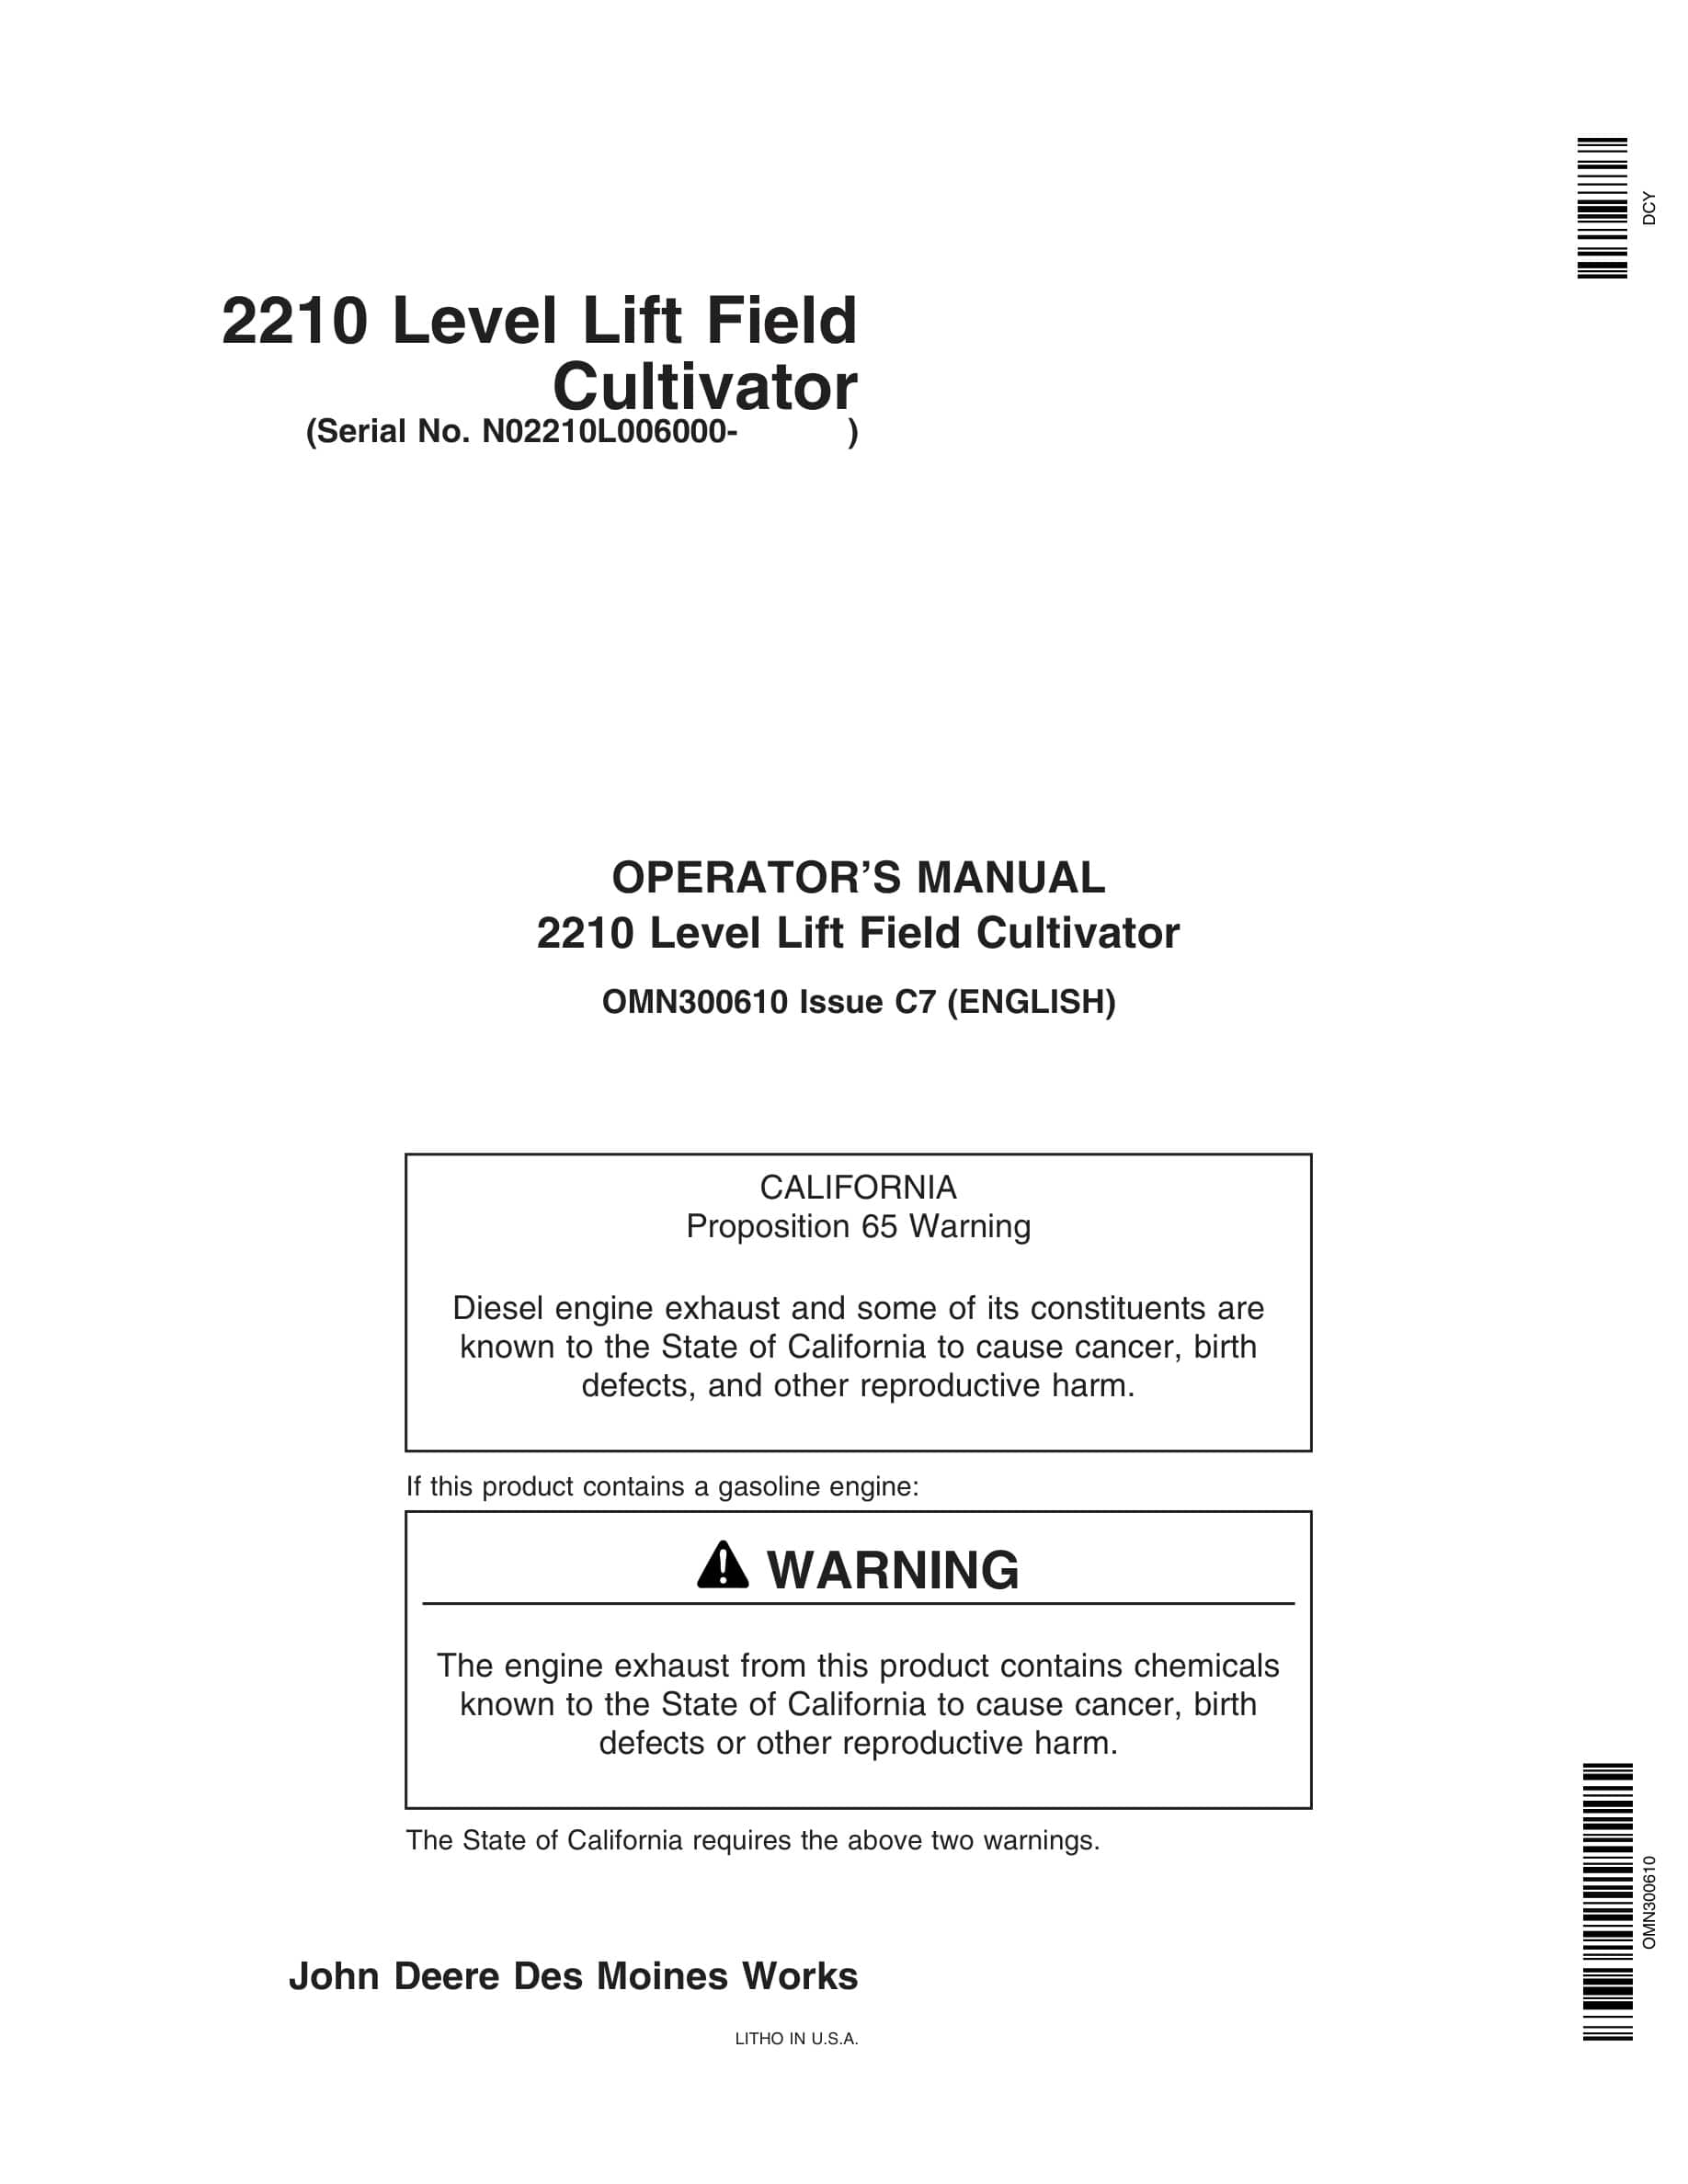 John Deere 2210 Level Lift Field Cultivator Operator Manual OMN300610-1